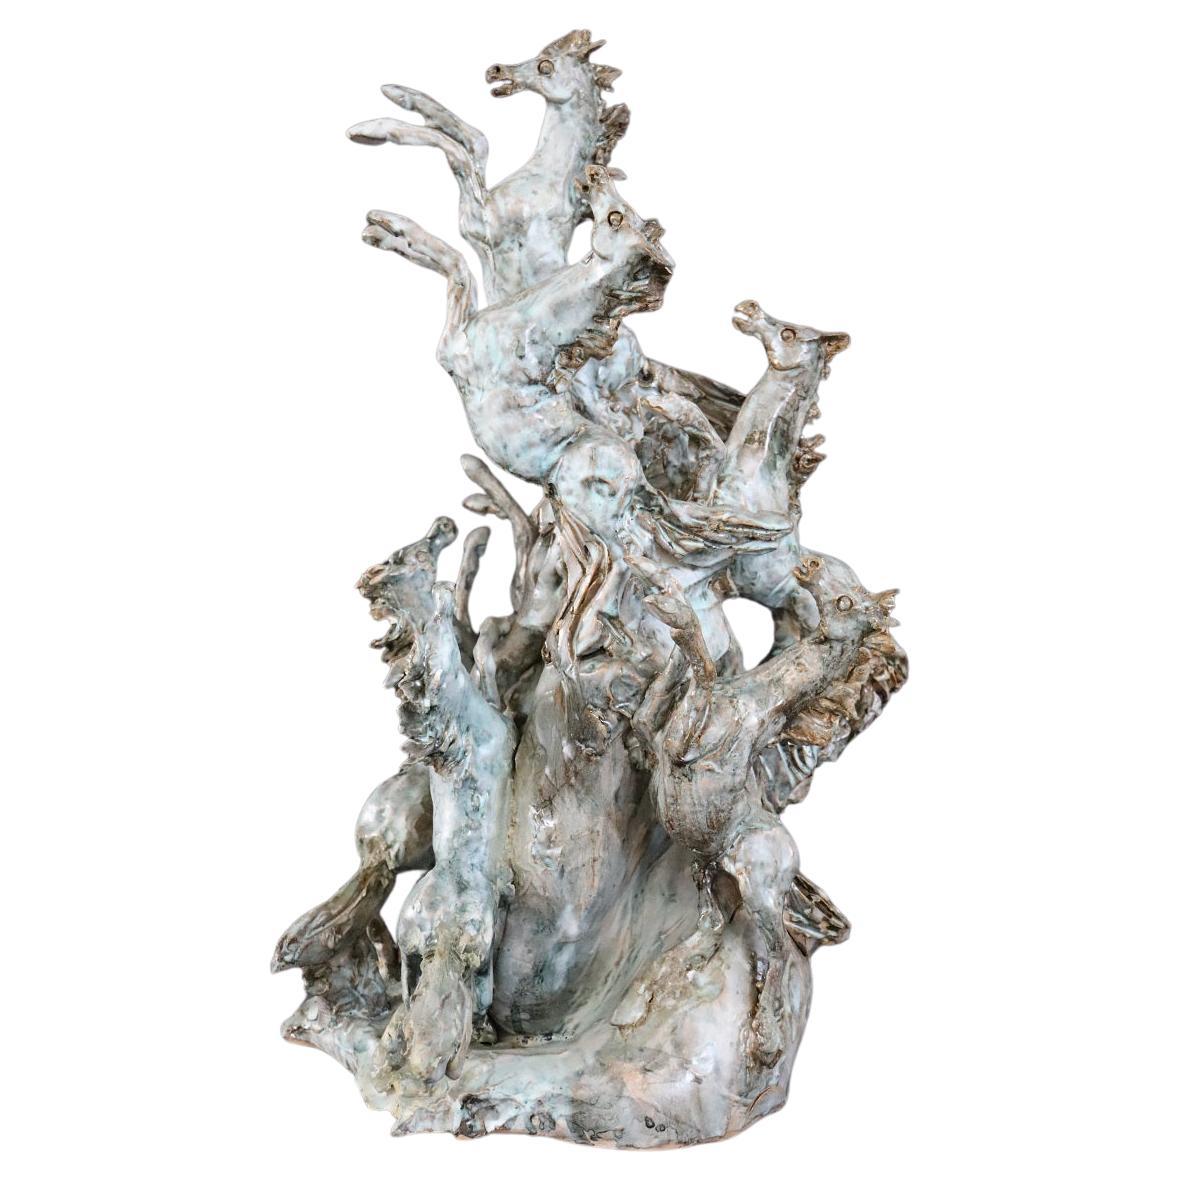 Italian Ceramic Sculpture "Horses" by Carlo Morelli For Sale